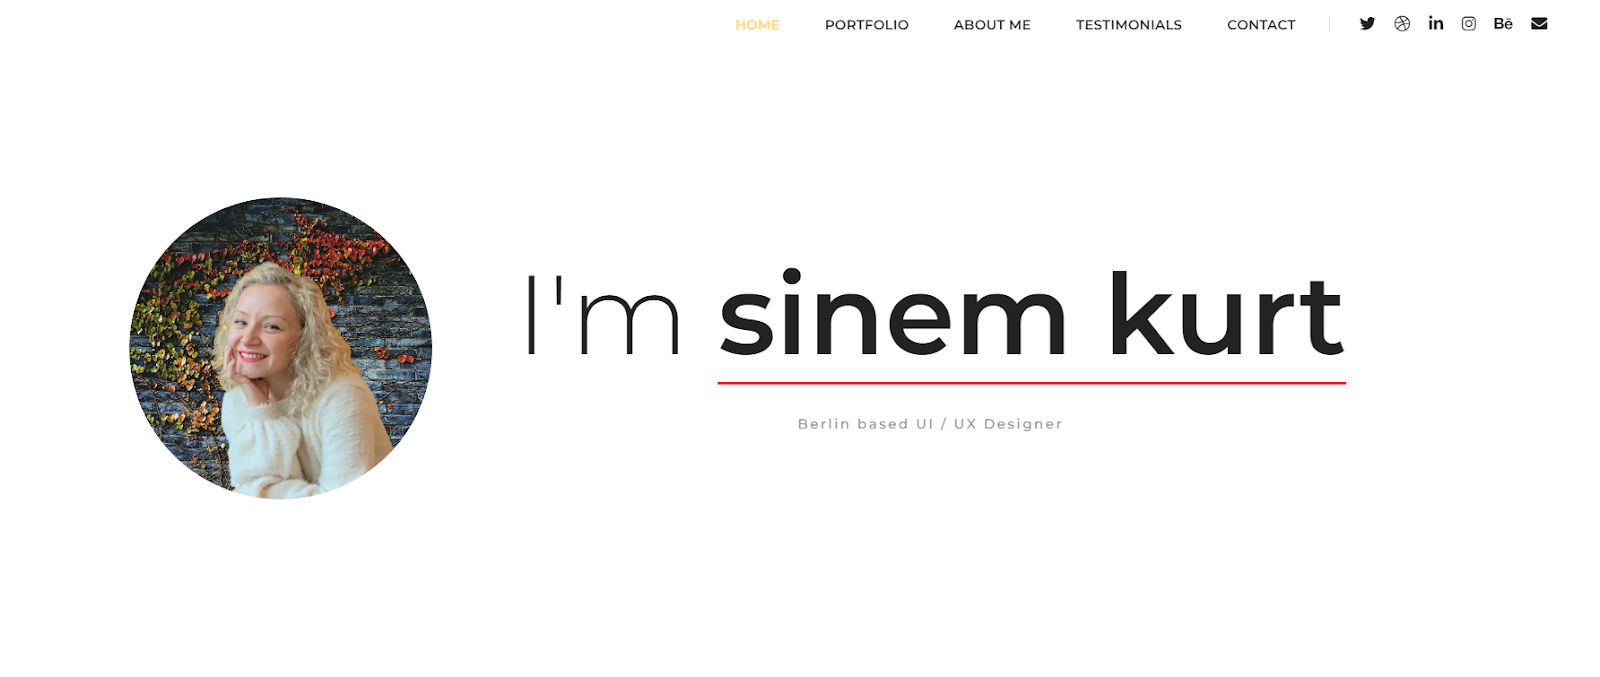 Sinet Kurt’s UI portfolio home page